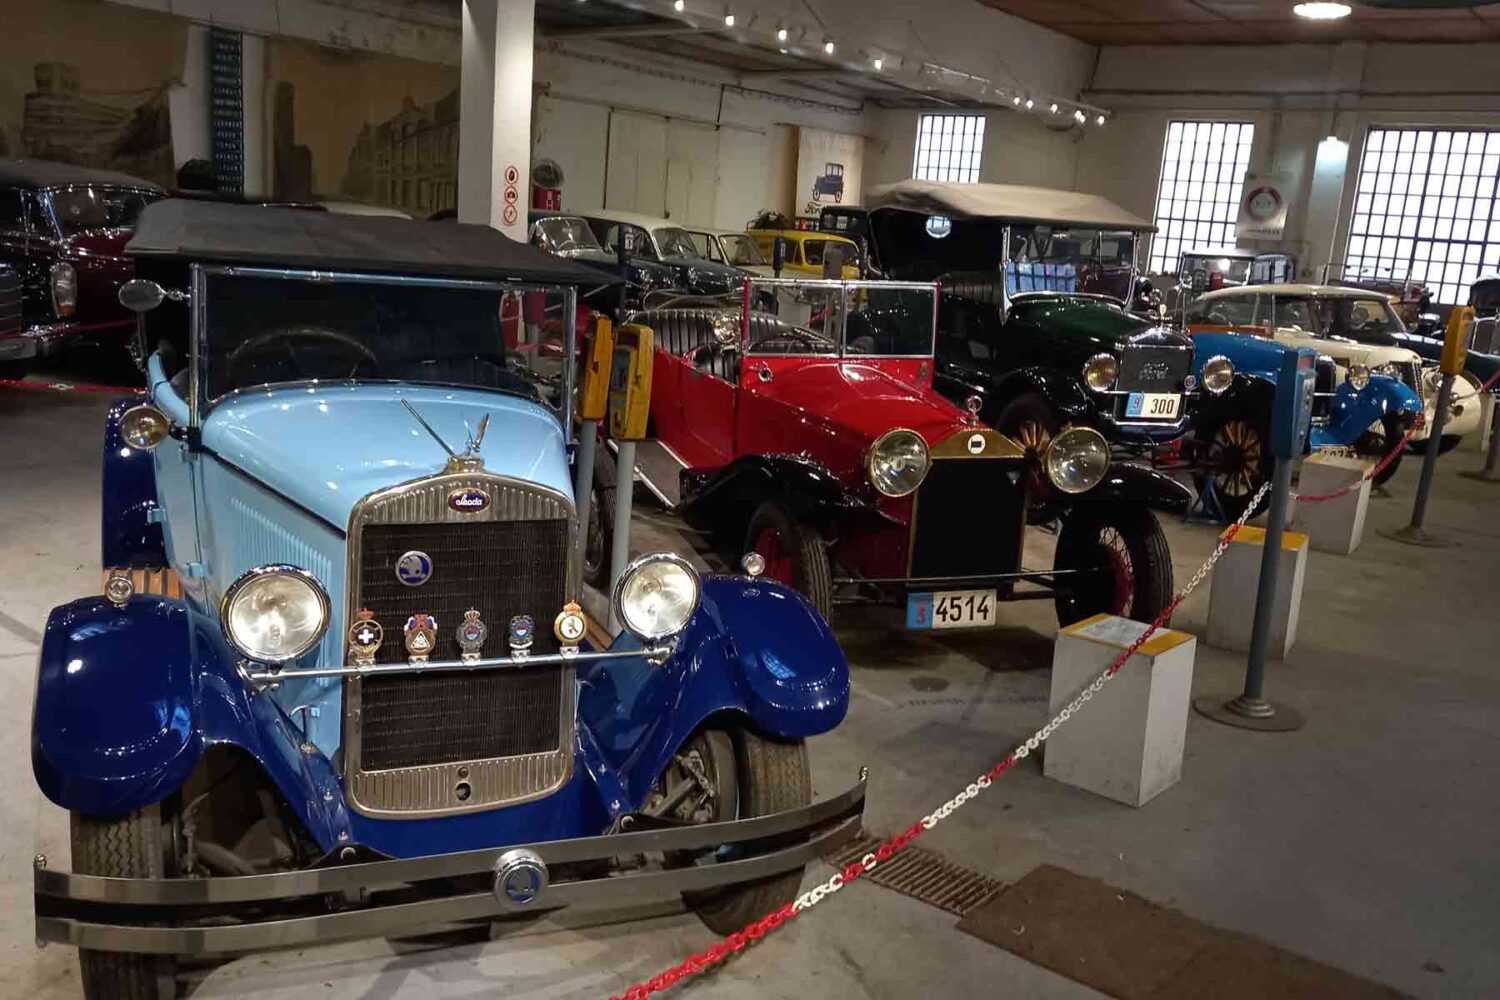 Beogradski muzeji - Muzej automobila